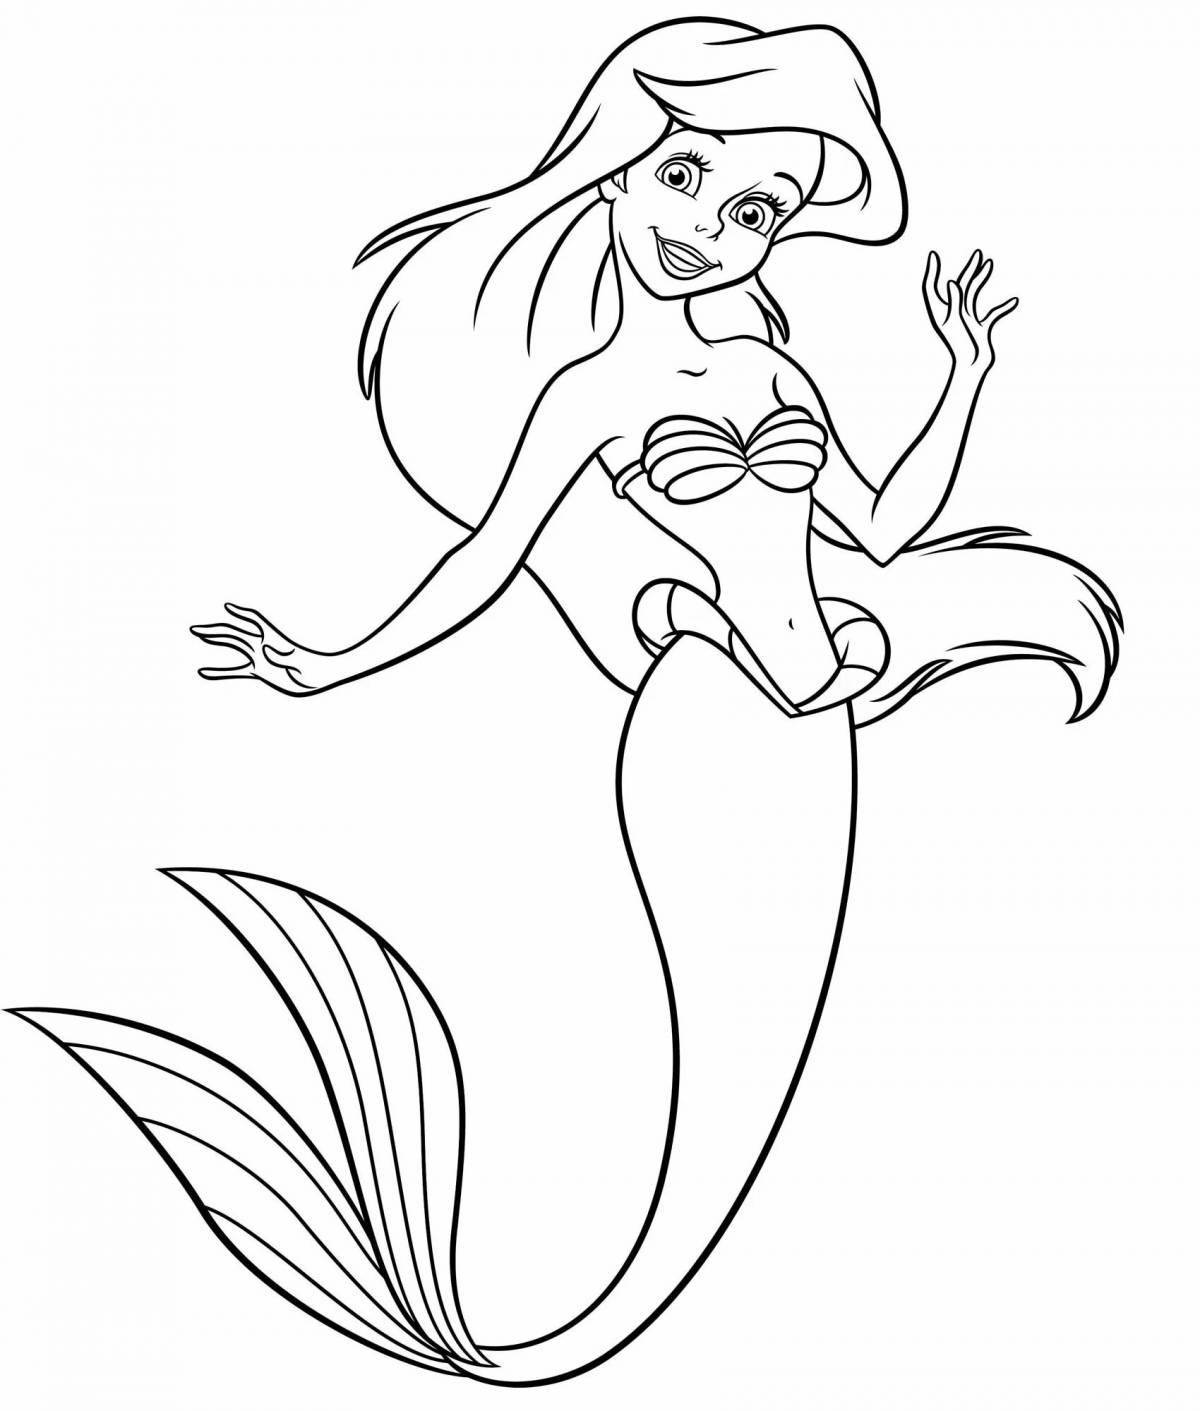 Joyful coloring ariel the little mermaid for kids